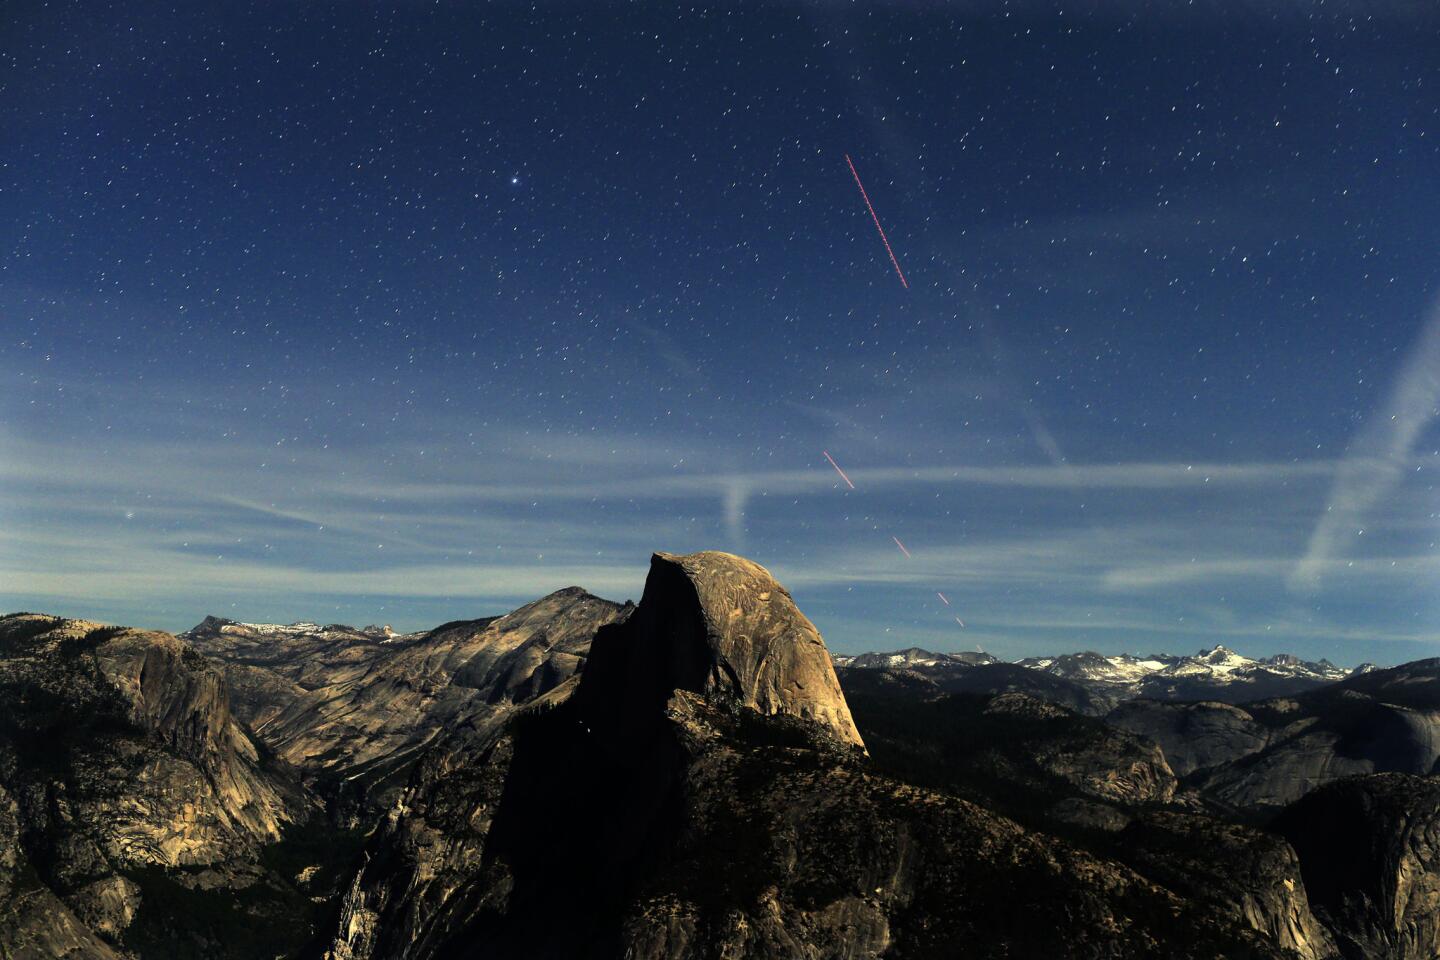 3. Yosemite National Park